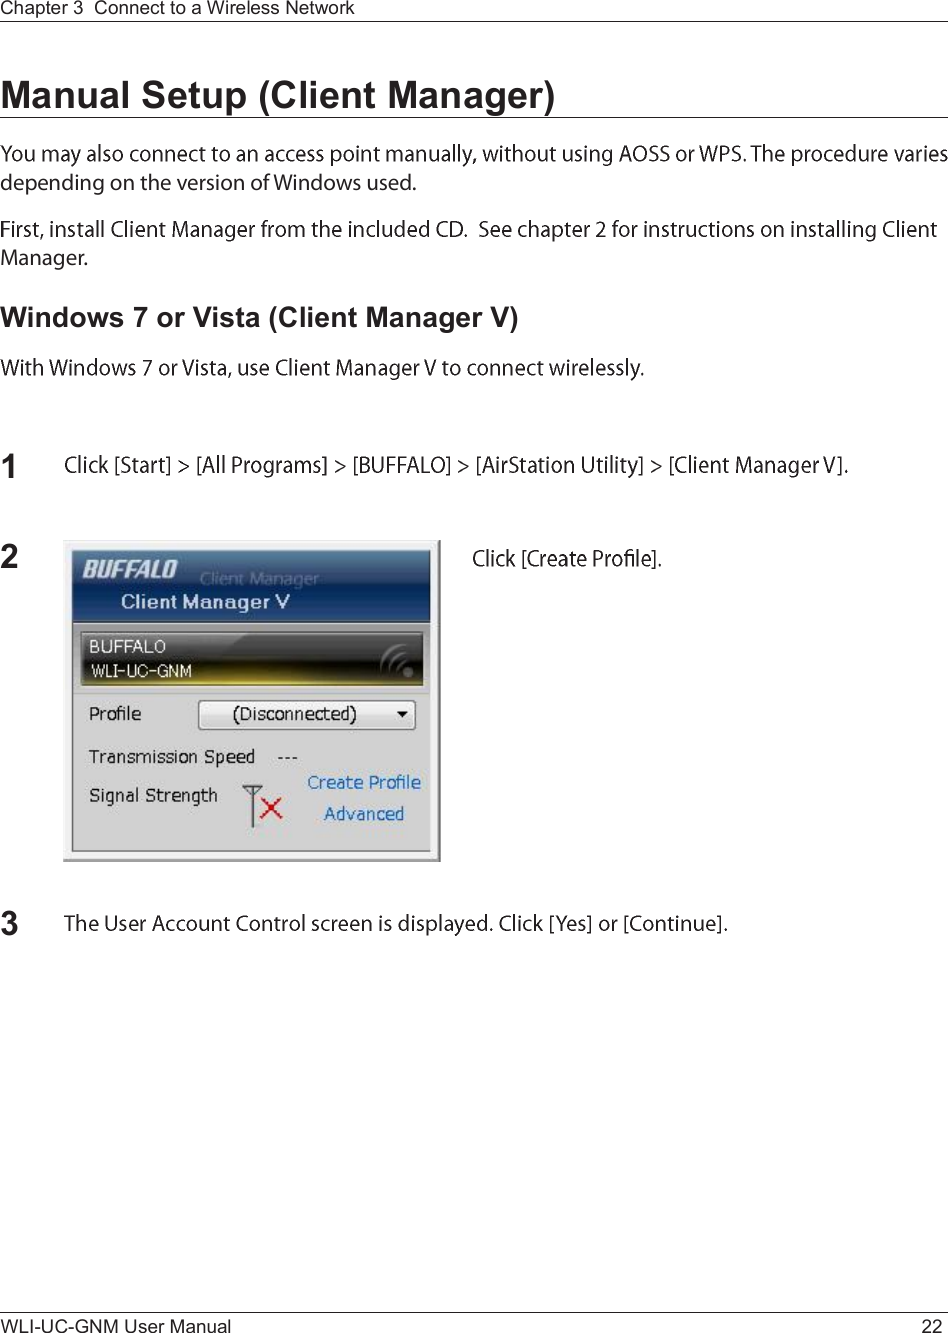 WLI-UC-GNM User Manual 22Chapter 3  Connect to a Wireless Network Manual Setup (Client Manager)¼»°»²¼·²¹ ±² ¬¸» ª»®-·±² ±º É·²¼±©- «-»¼òÓ¿²¿¹»®òWindows 7 or Vista (Client Manager V)132